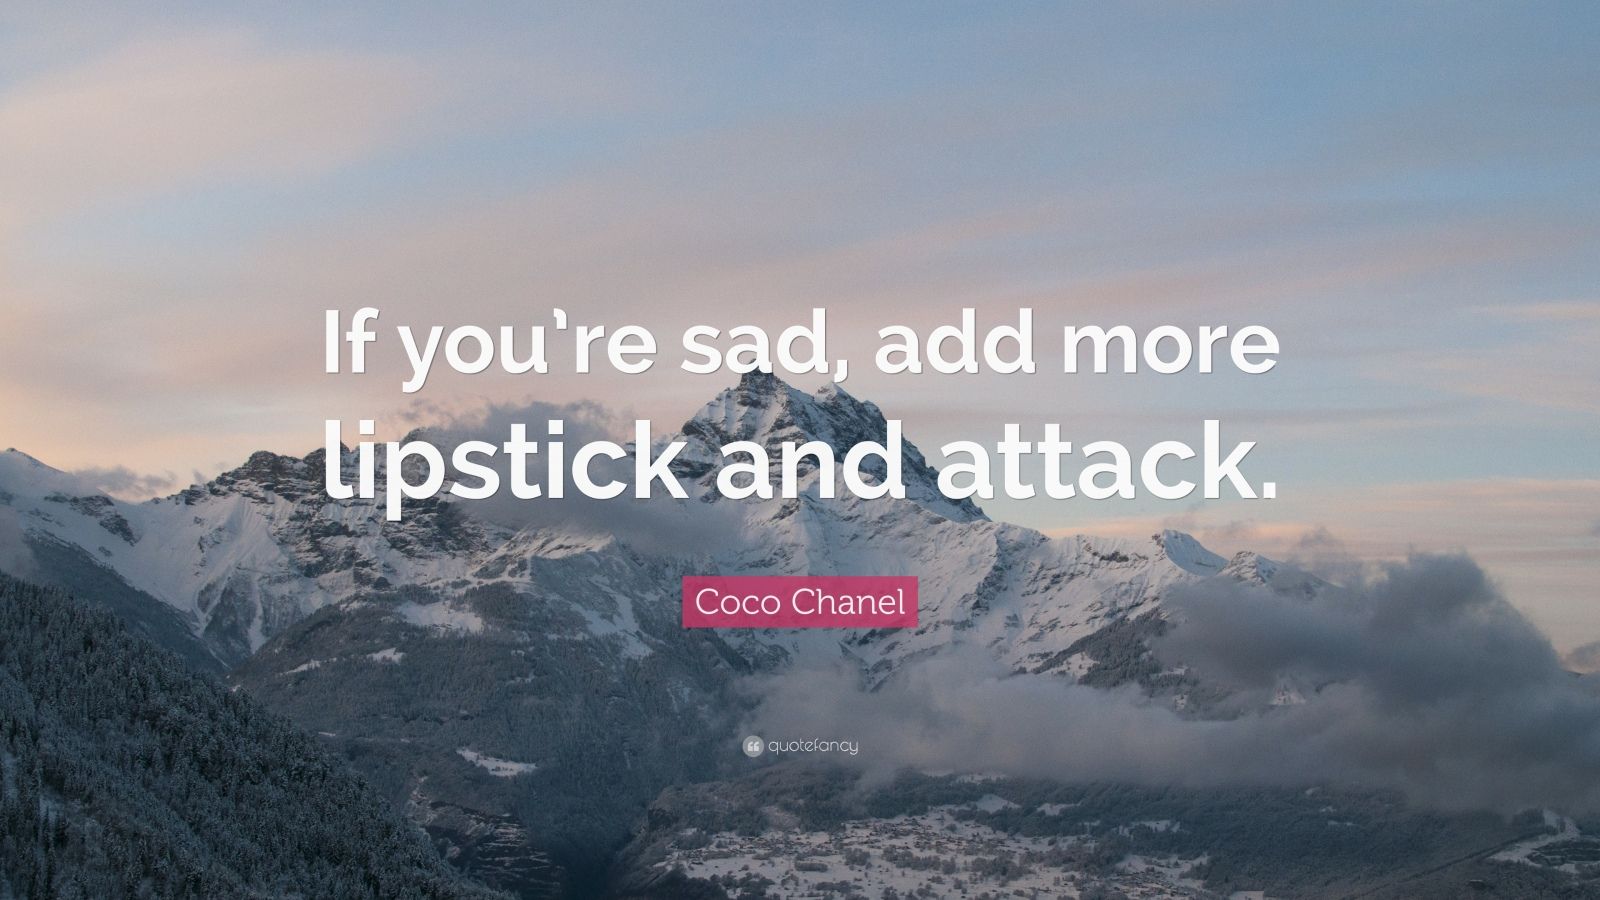 If Youre Sad Add More Lipstick And Attack Coco Chanel shirt - Kingteeshop